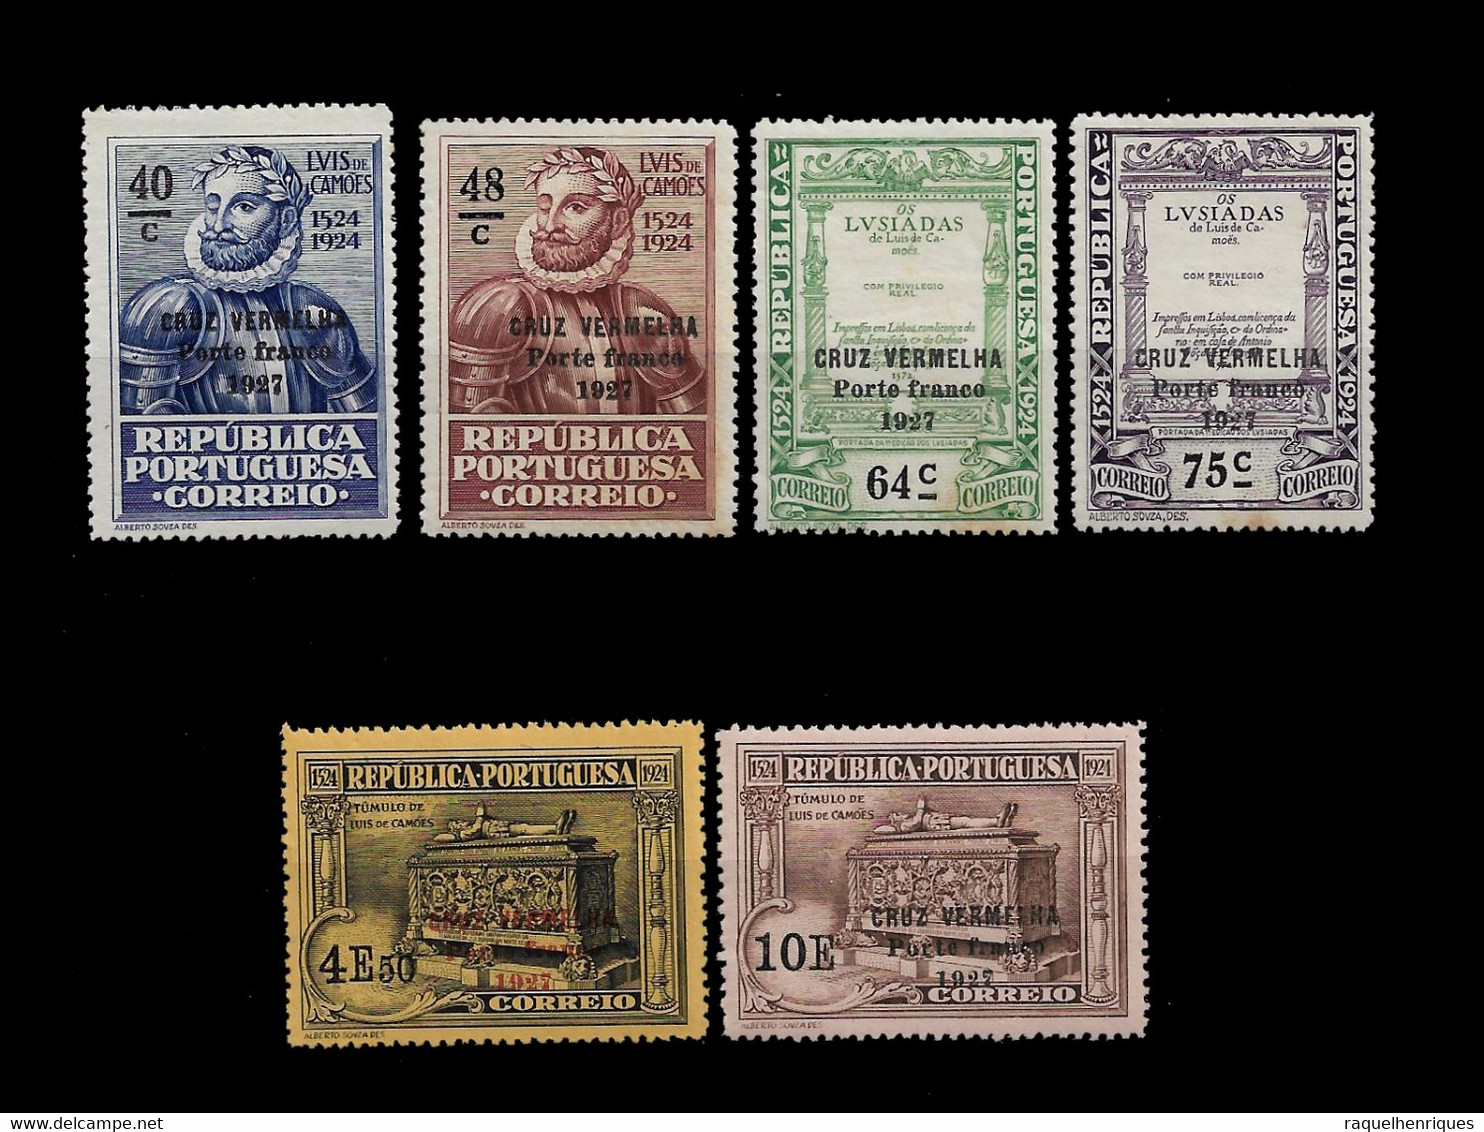 PORTUGAL PORTE FRANCO - 1927 CRUZ VERMELHA SET MNH (PLB#01-92) - Unused Stamps